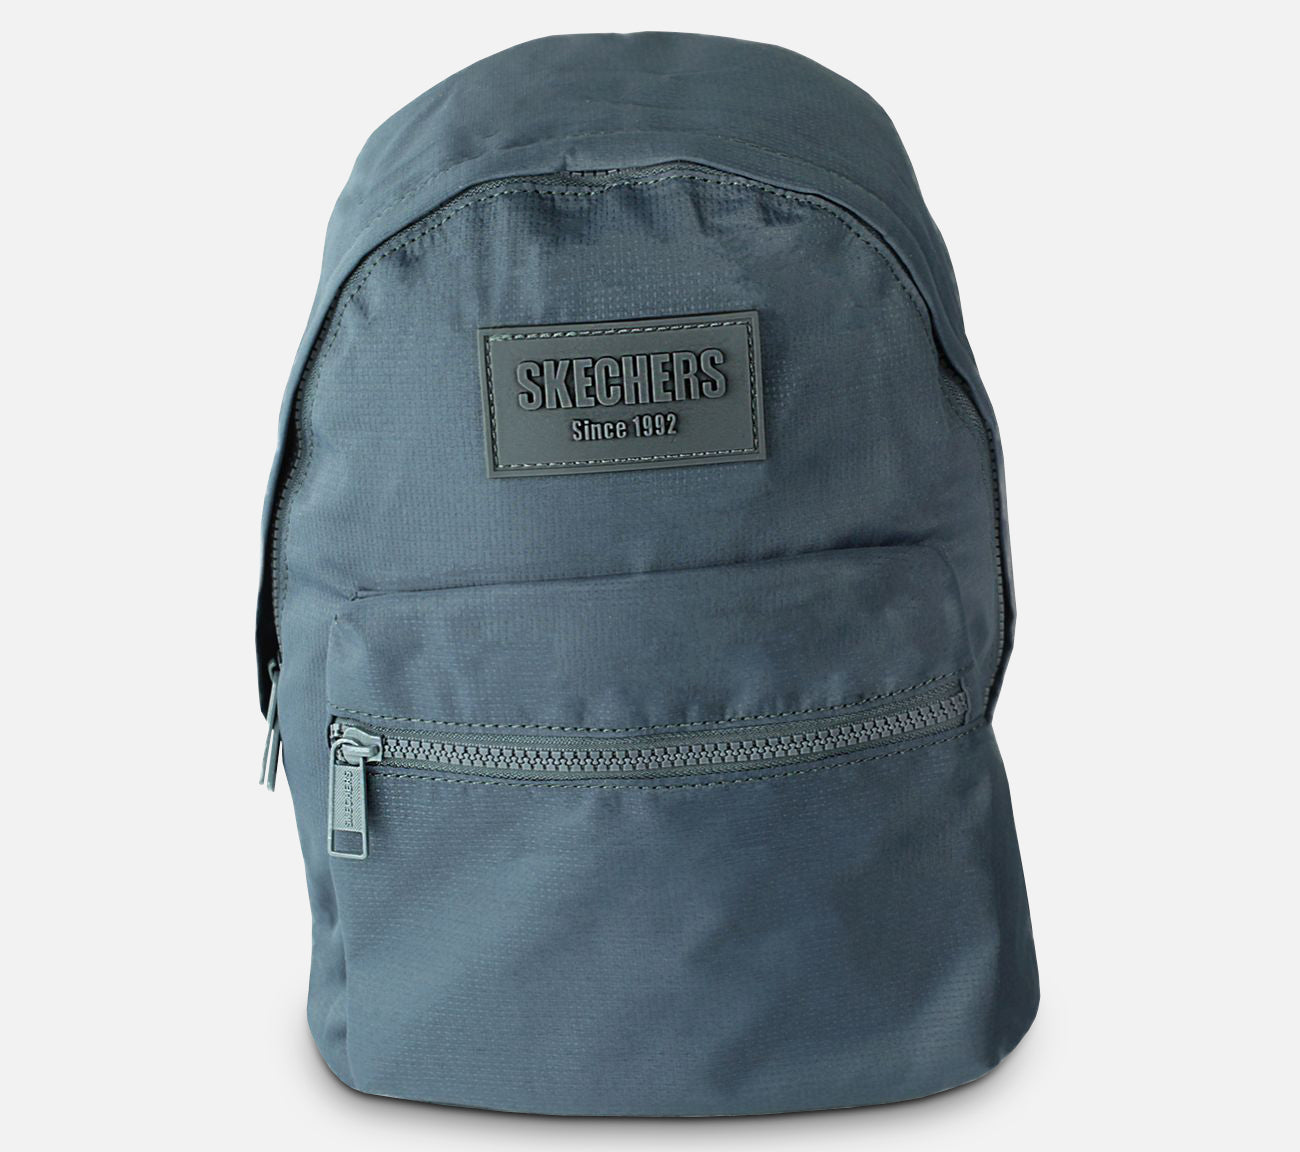 Skechers Small Backpack Bags Skechers